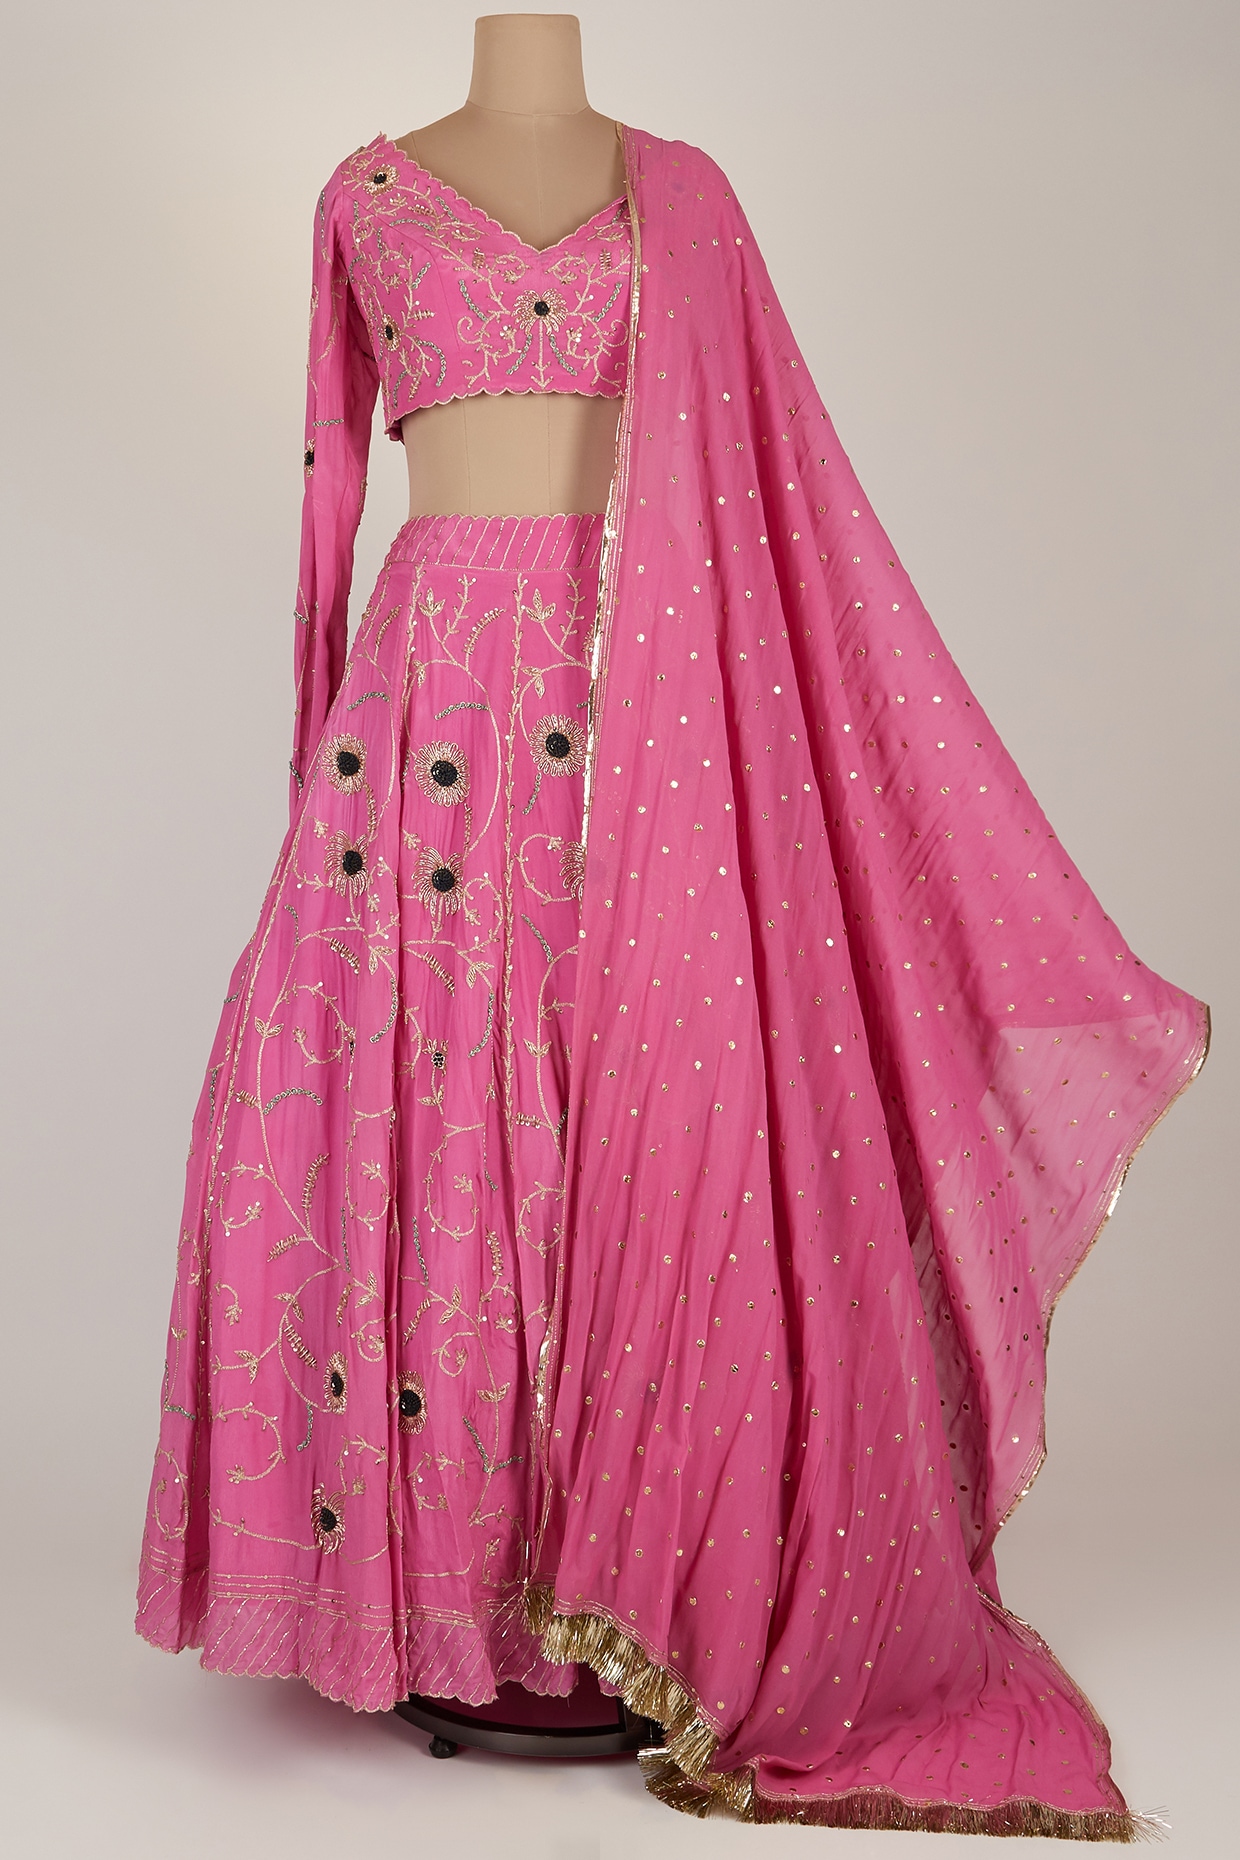 Buy Handicraft by Advay creation Red Golden Kundan Chudi Silk Thread Bangles  for Saree, Salwar Suit and Lehenga (Set of 8) at Amazon.in